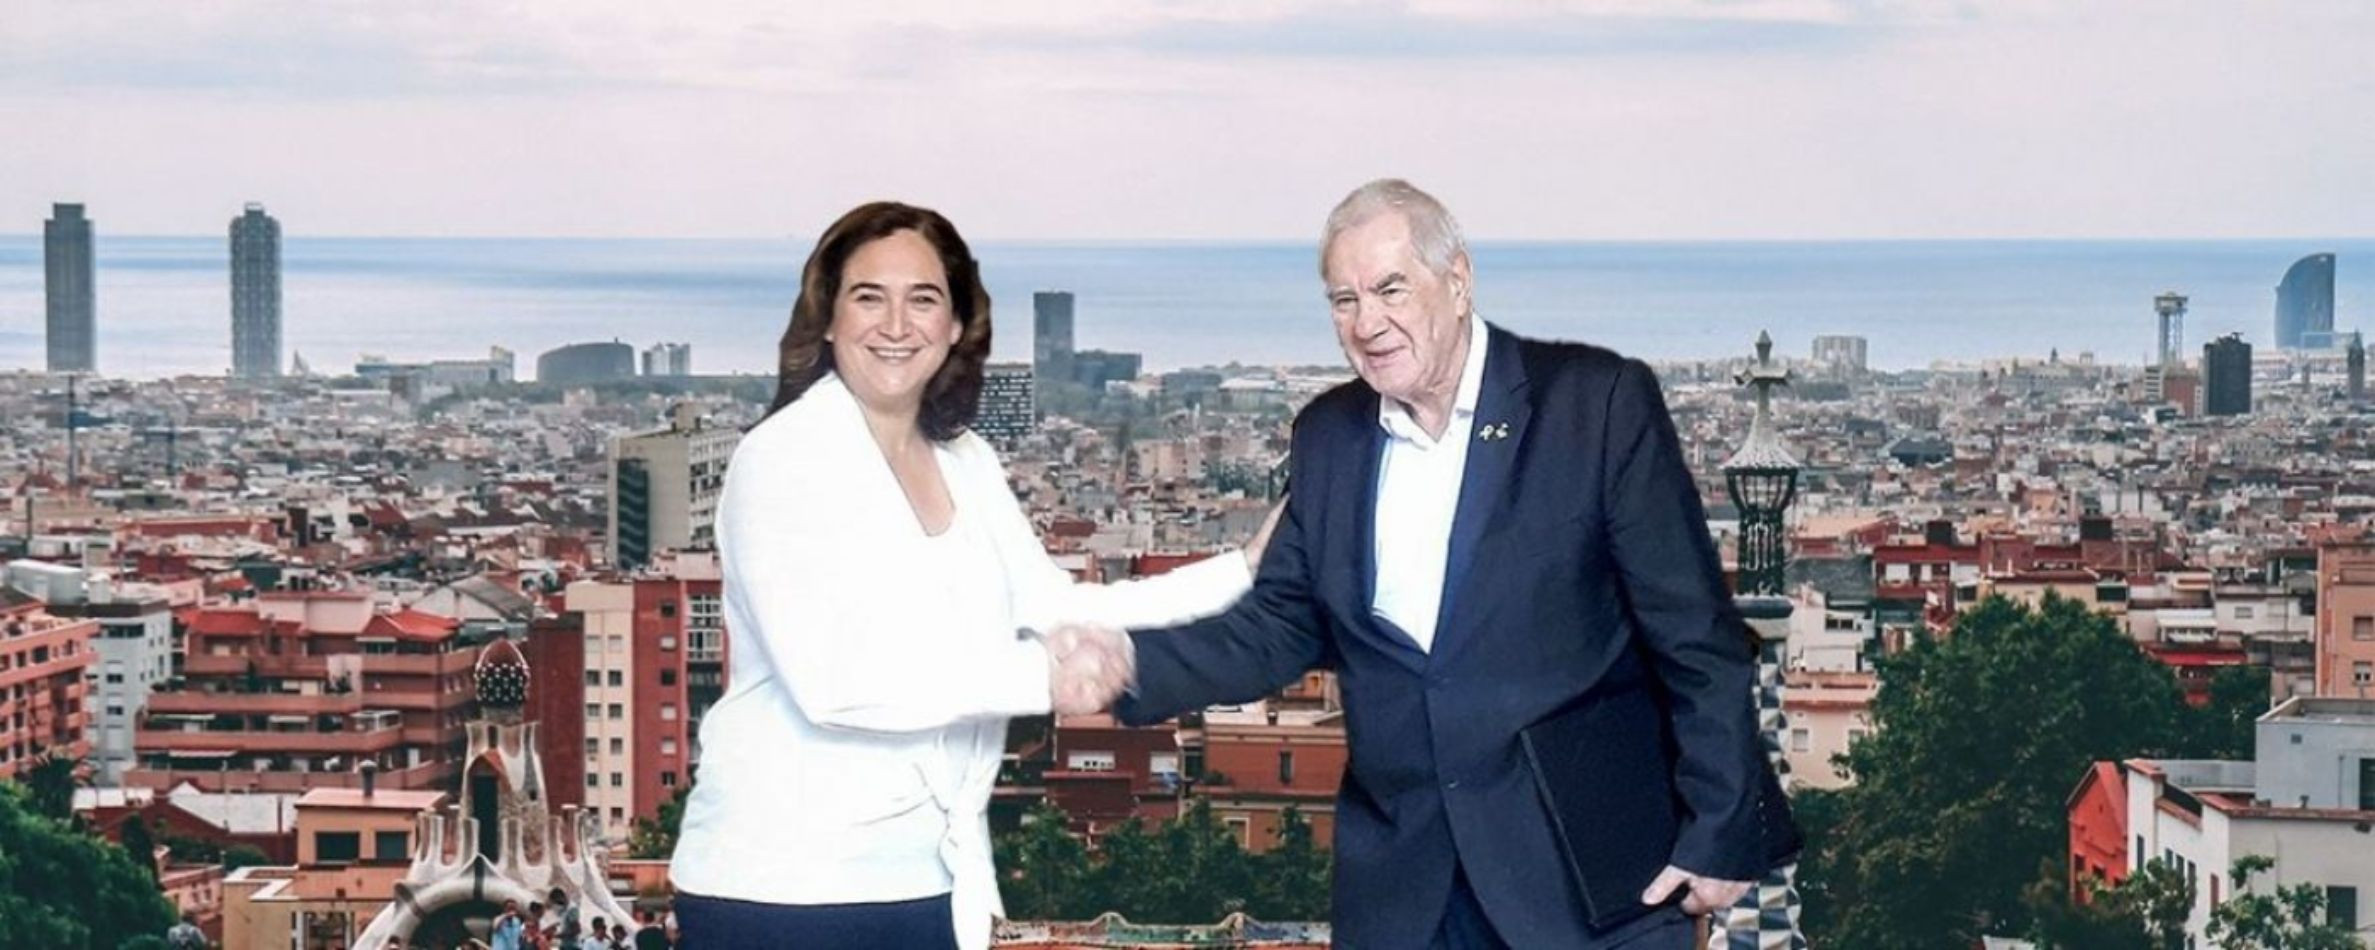 La alcaldesa de Barcelona, Ada Colau, y el líder de ERC, Ernest Maragall / FOTOMONTAJE METRÓPOLI